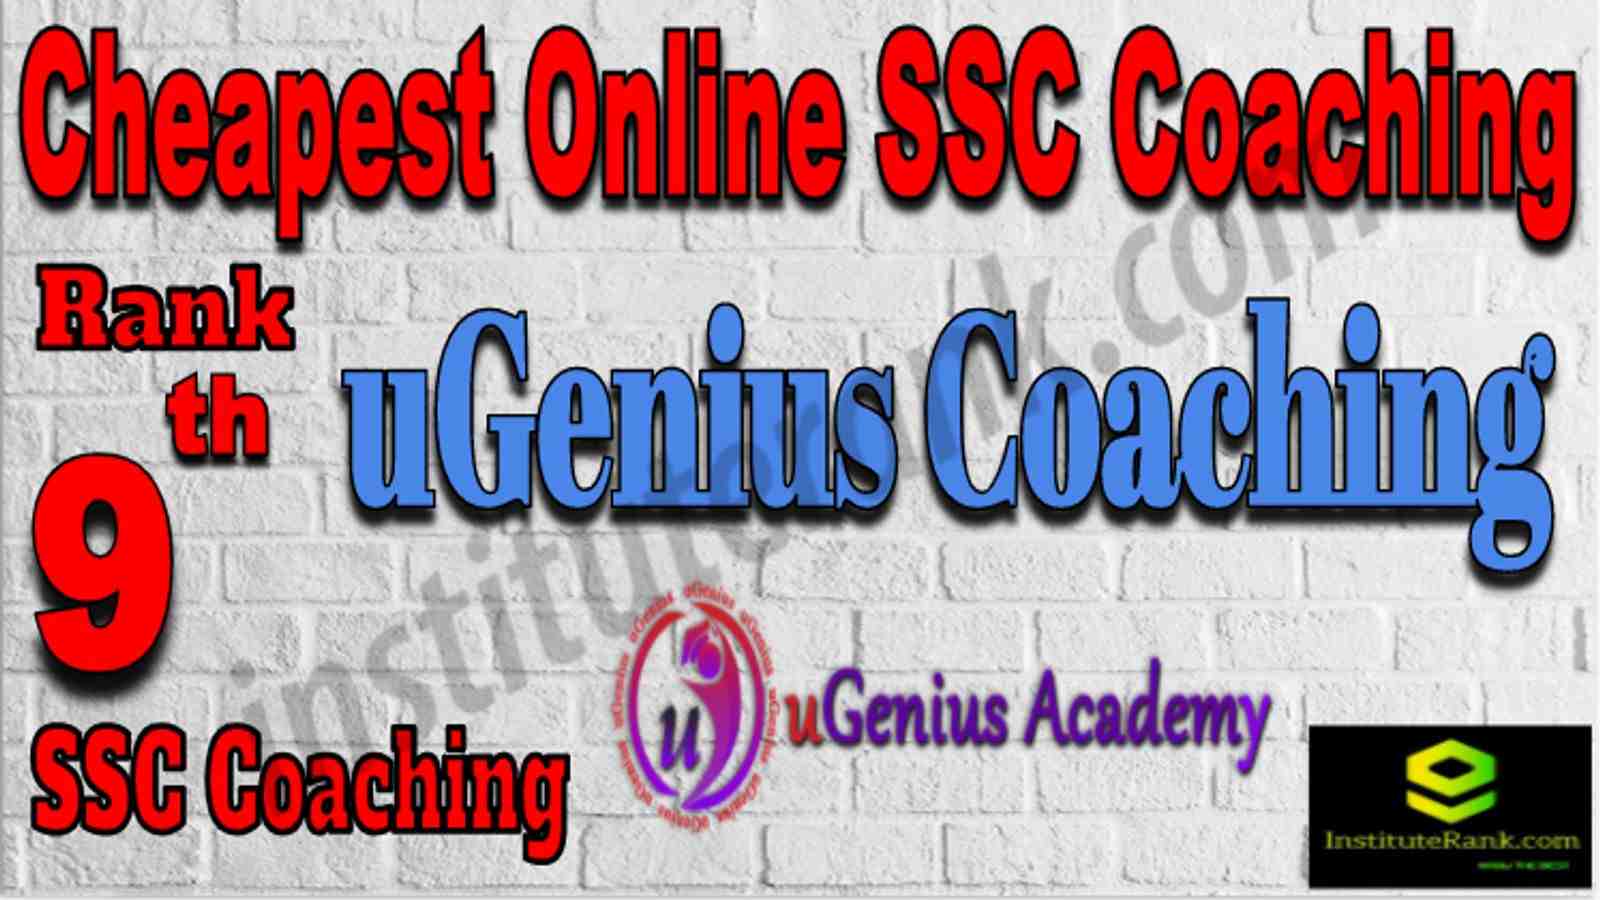 Rank 9 Cheapest Online SSC Coaching